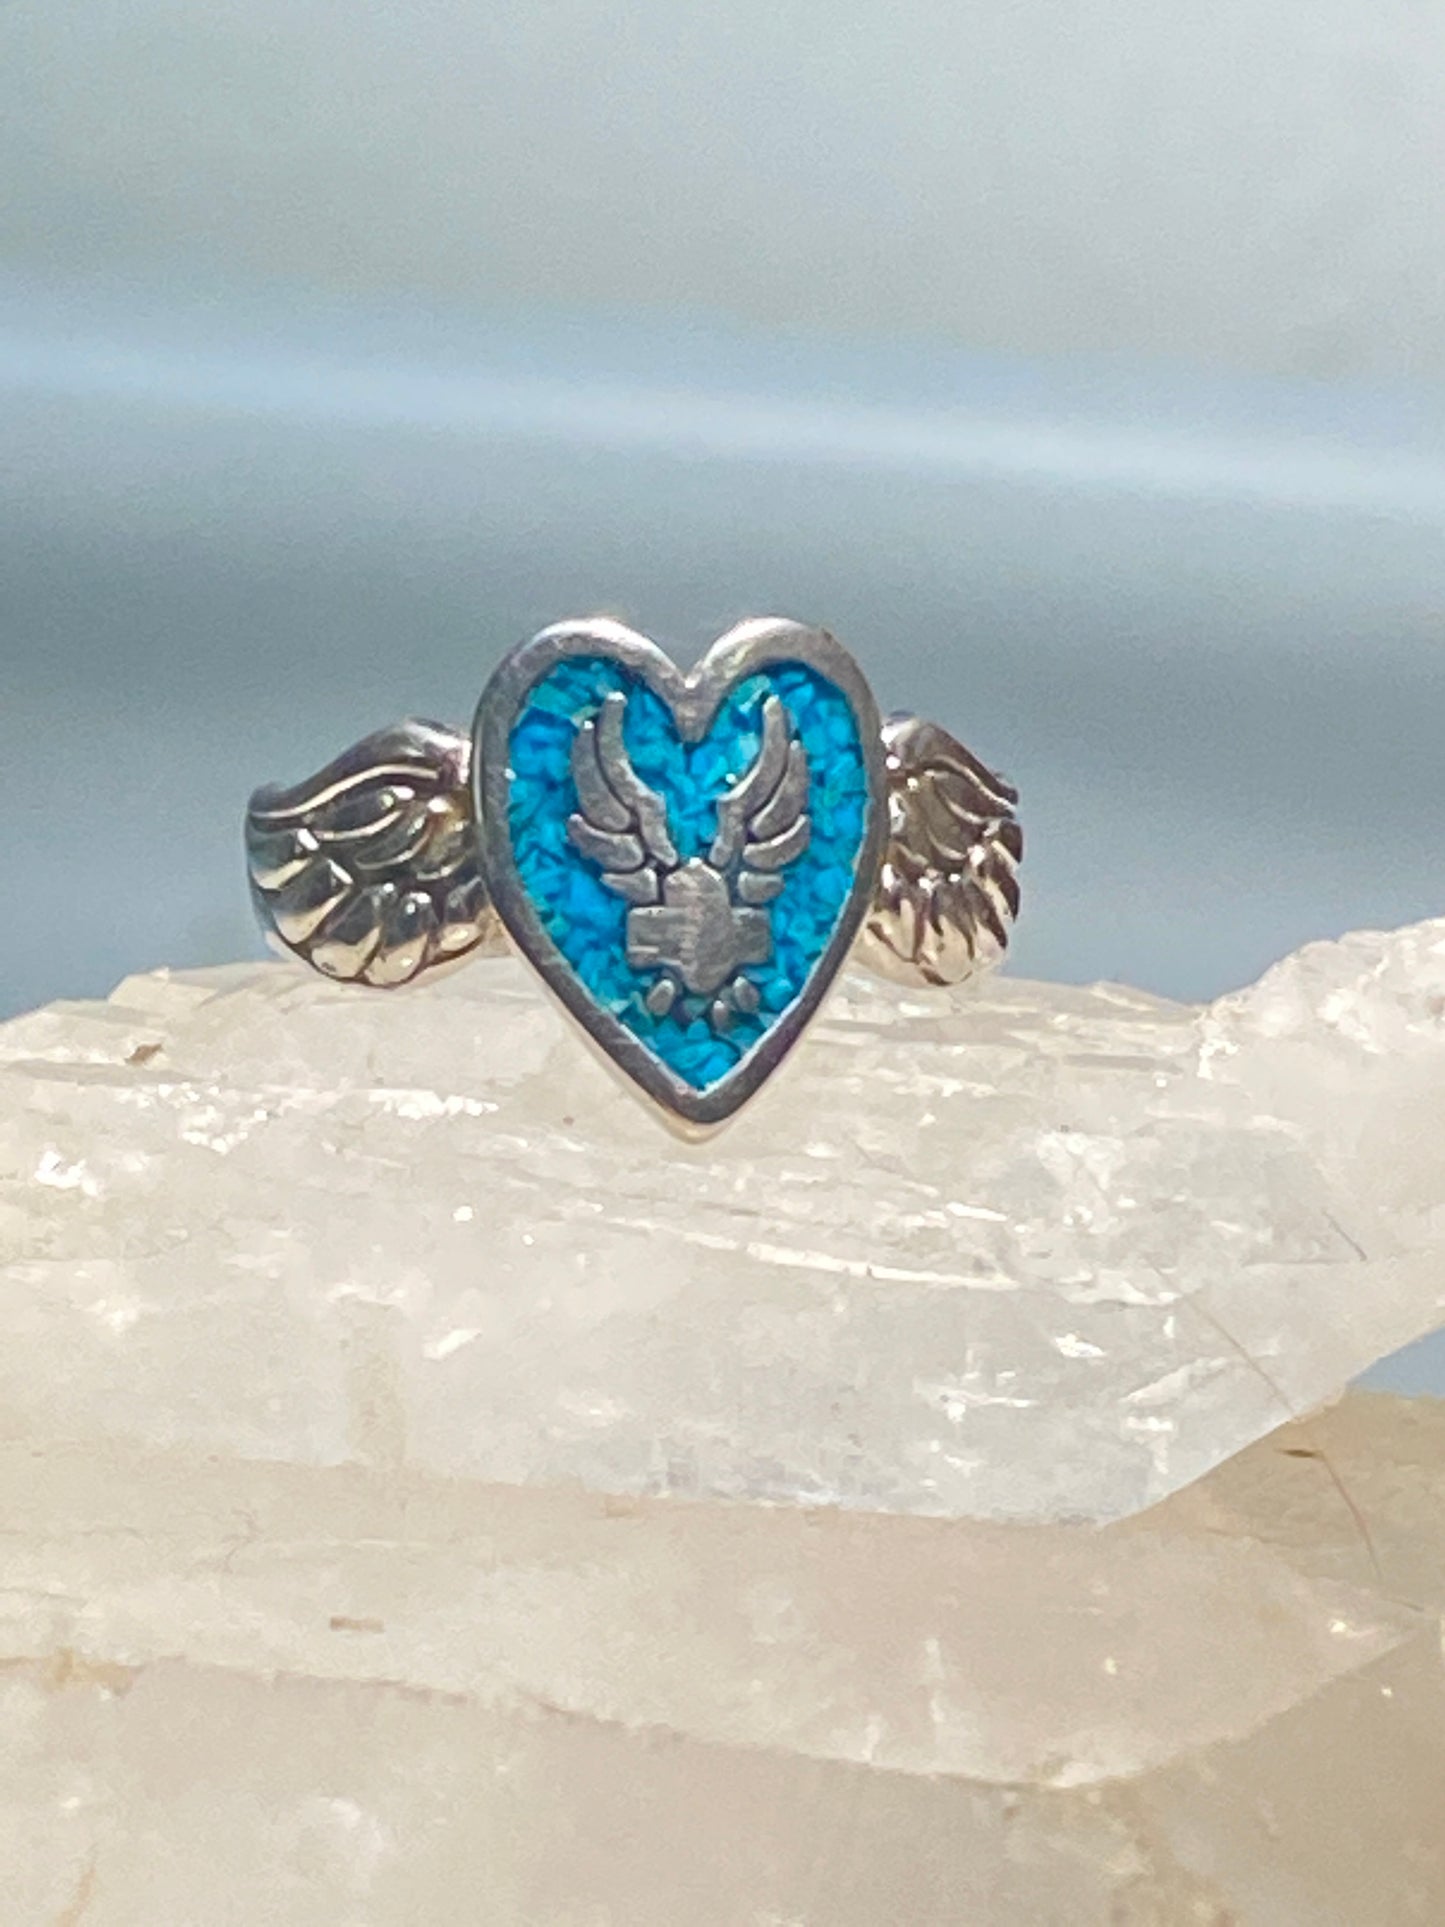 Biker ring heart w wings band turquoise chips southwest sterling silver women